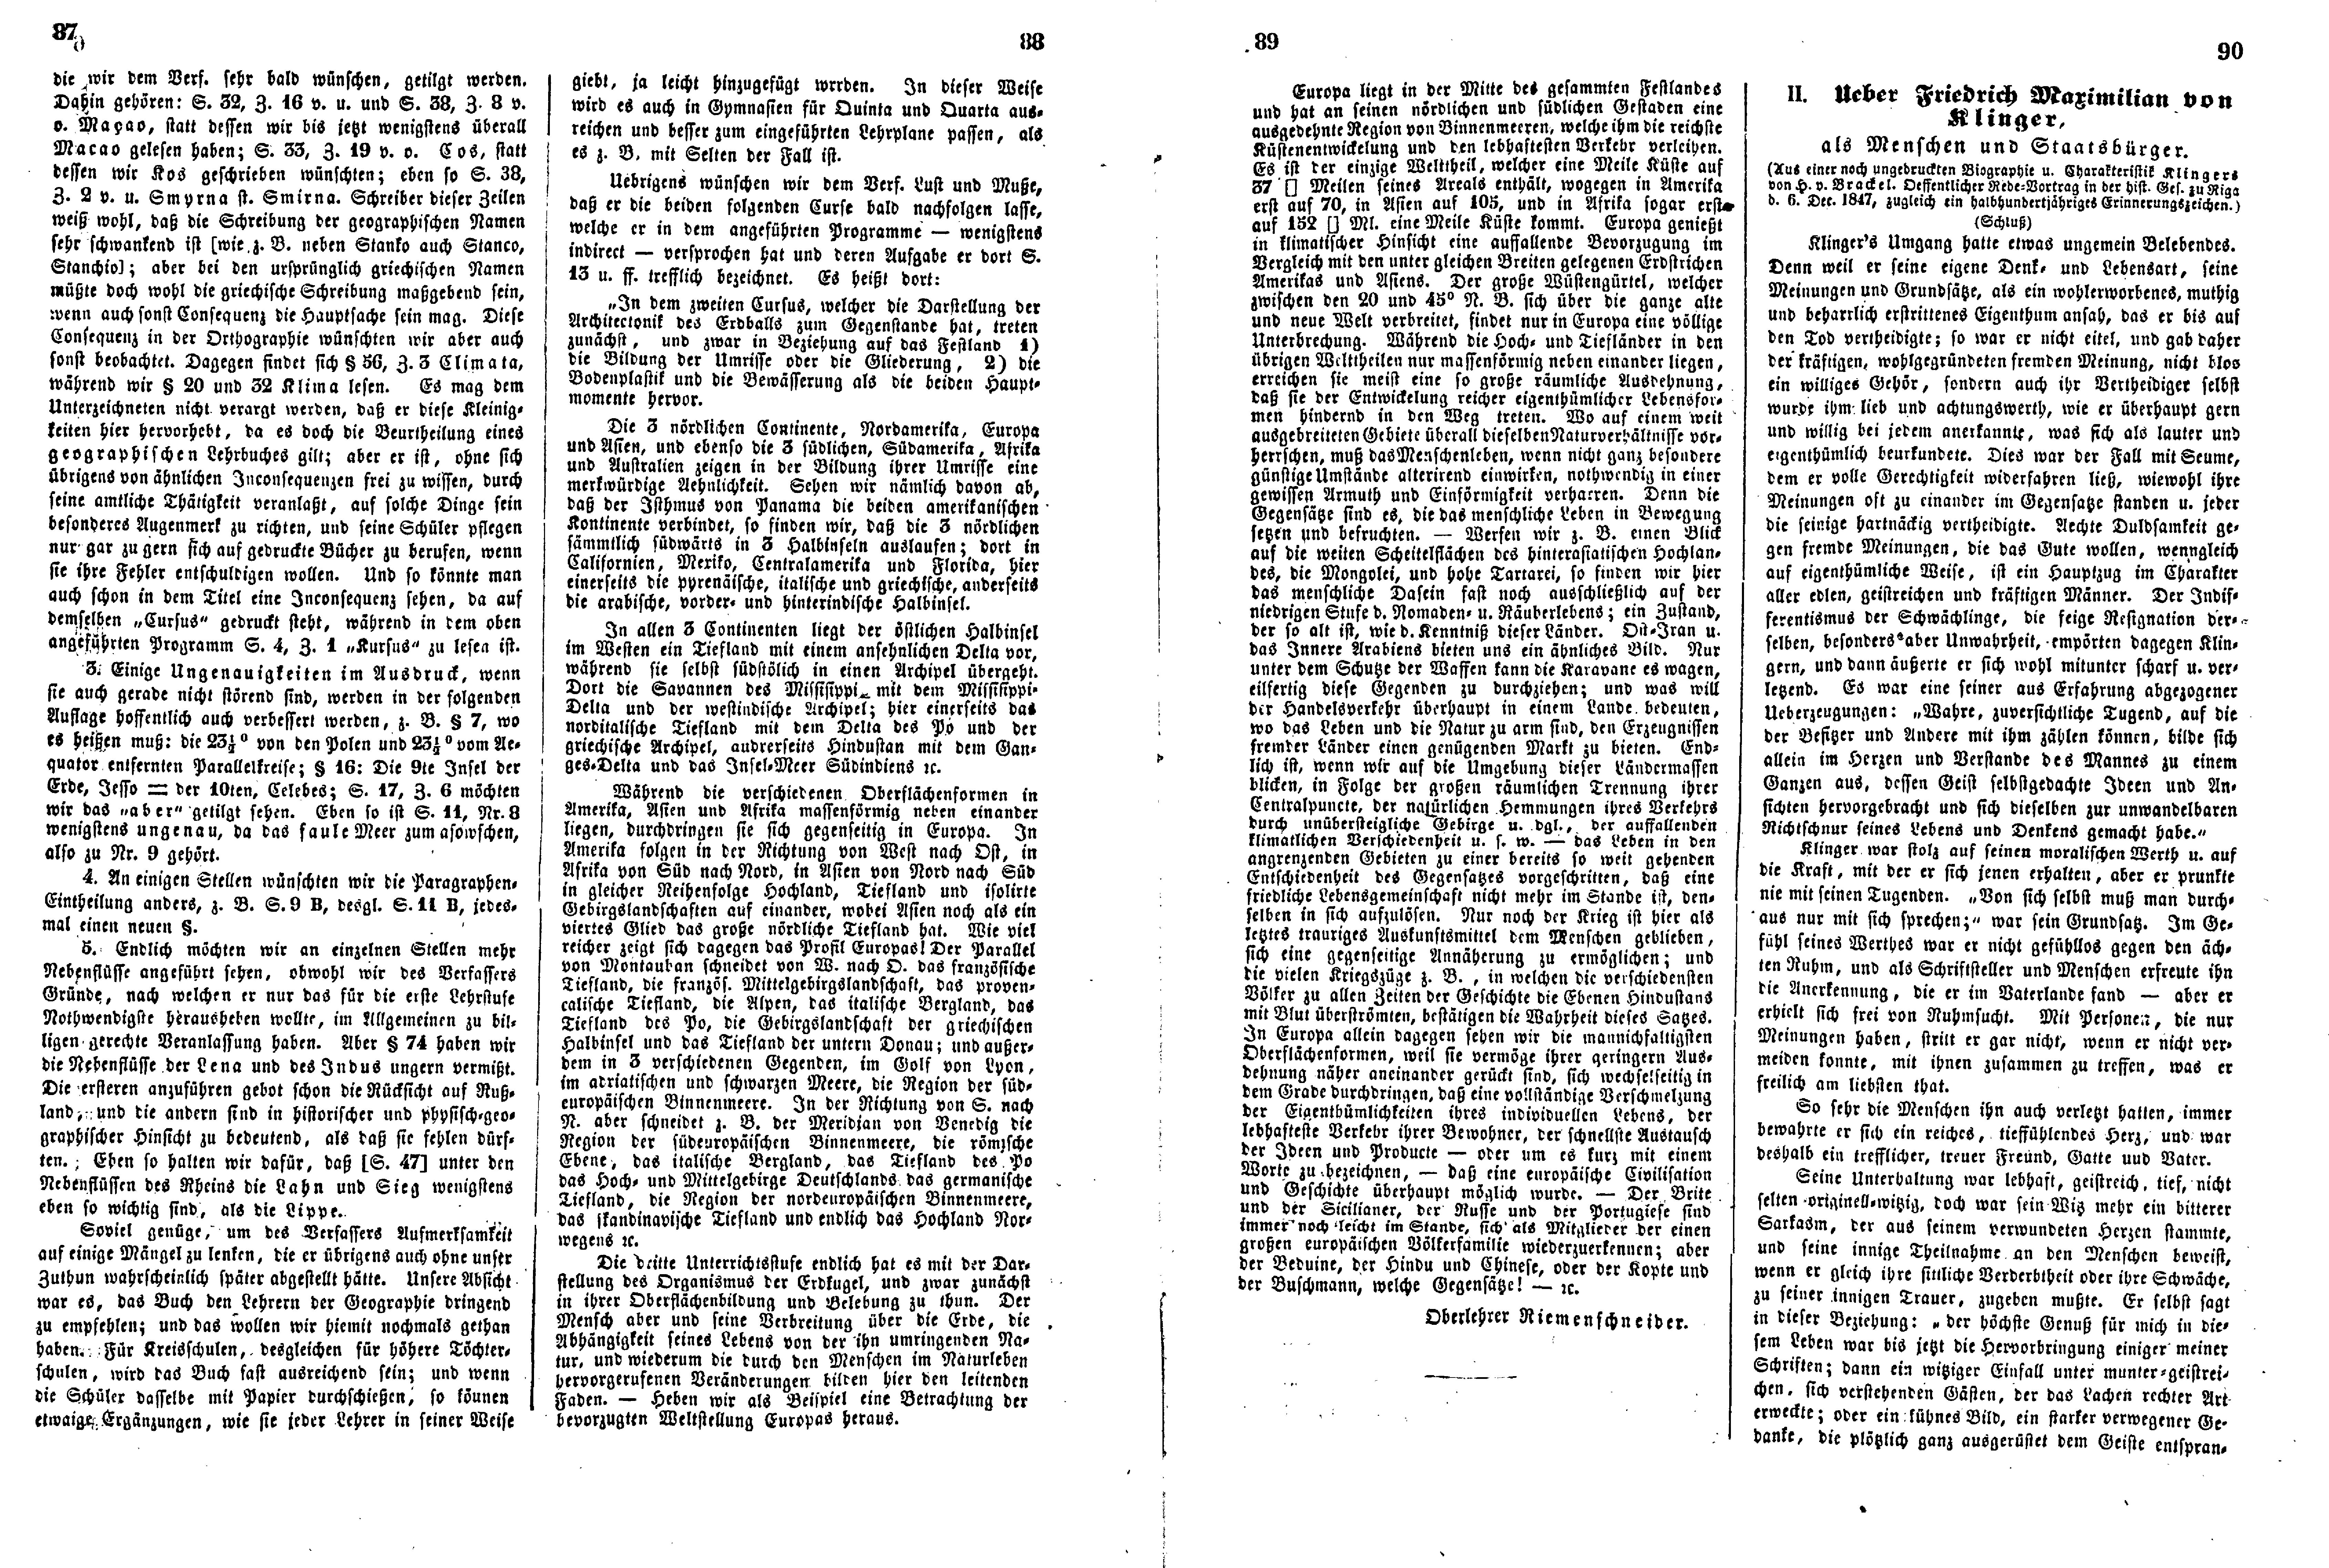 Das Inland [18] (1853) | 32. (87-90) Main body of text